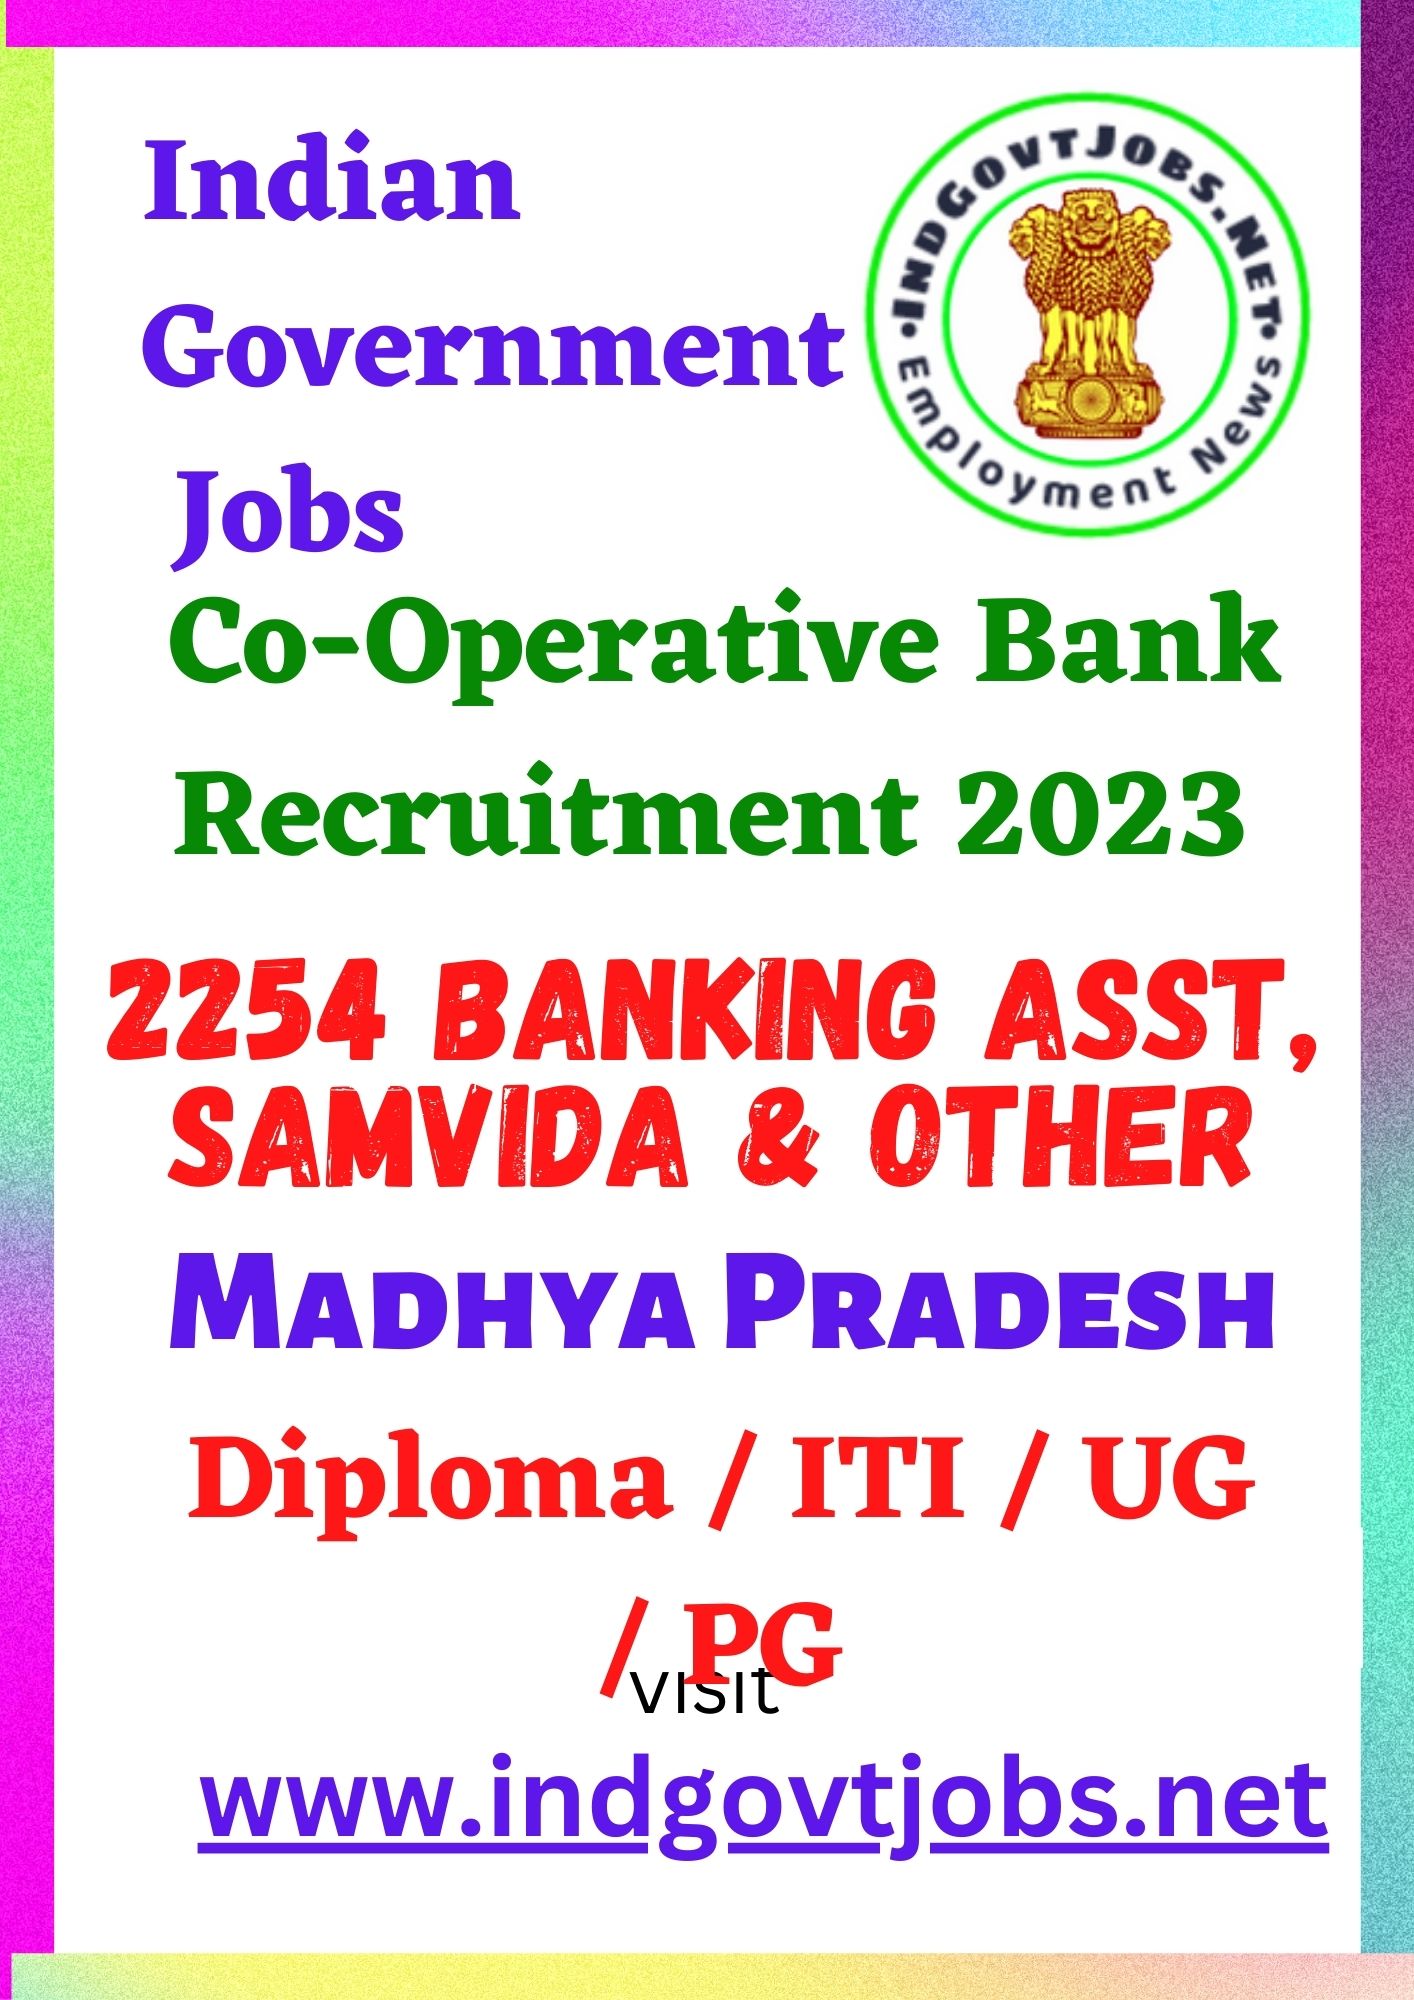 Co-Operative Bank MP Recruitment - 2254 Banking Asst, Samvida & Other Best Job Vacancy 2022